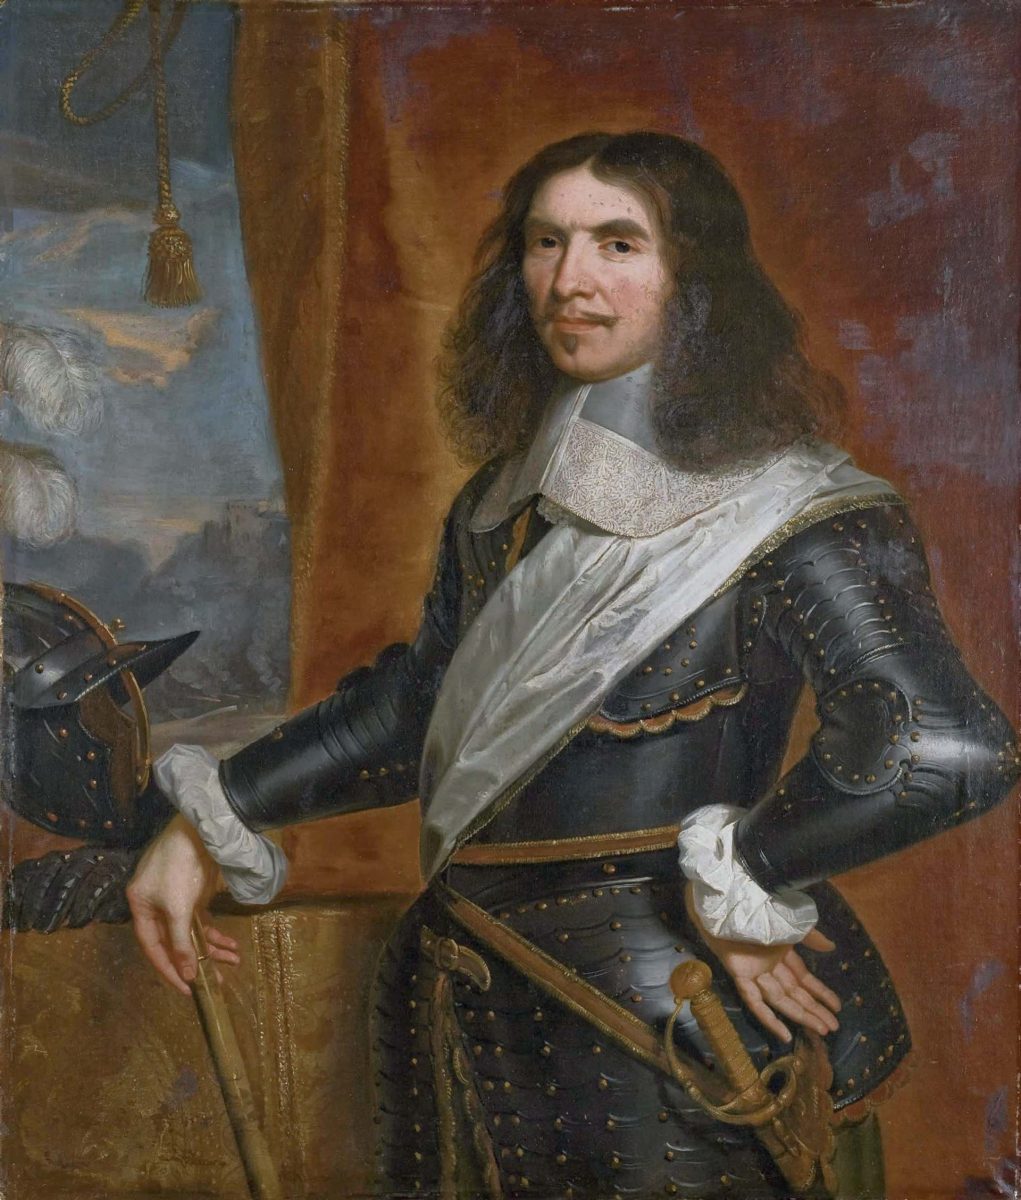 Henri de la Tour d'Auvergne, burggraaf van Turenne